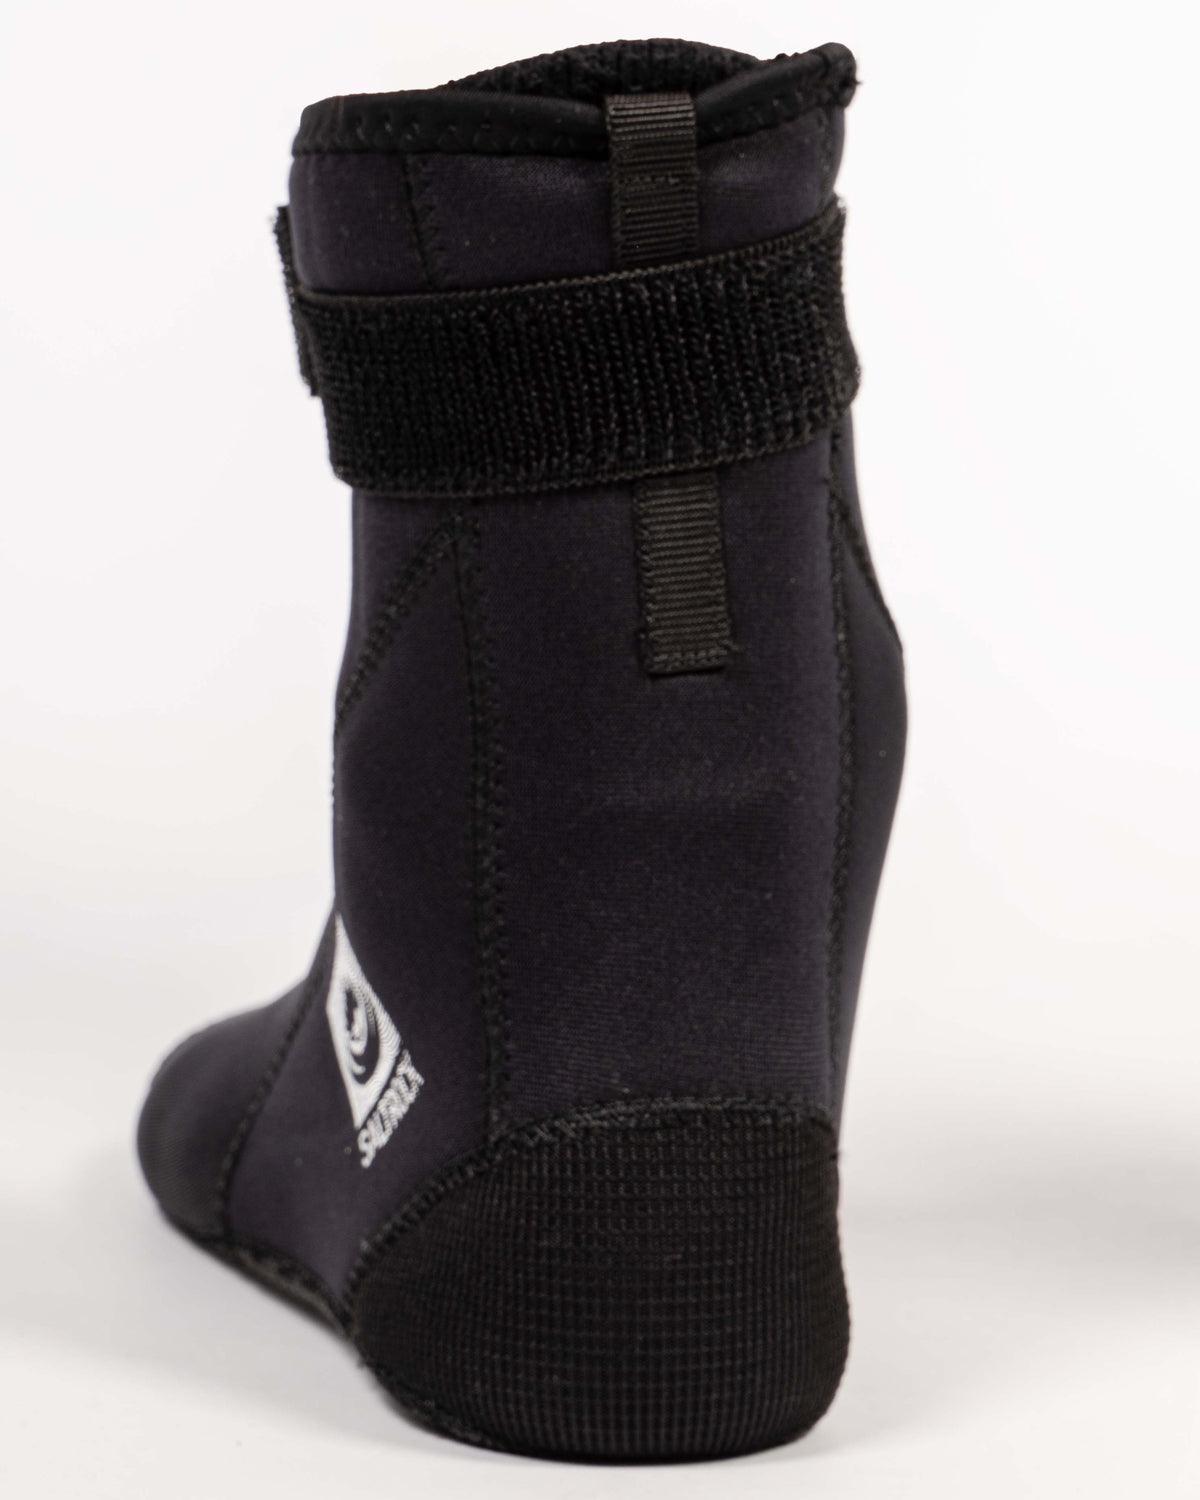 Core - Wetsuit Boot - Saltrock